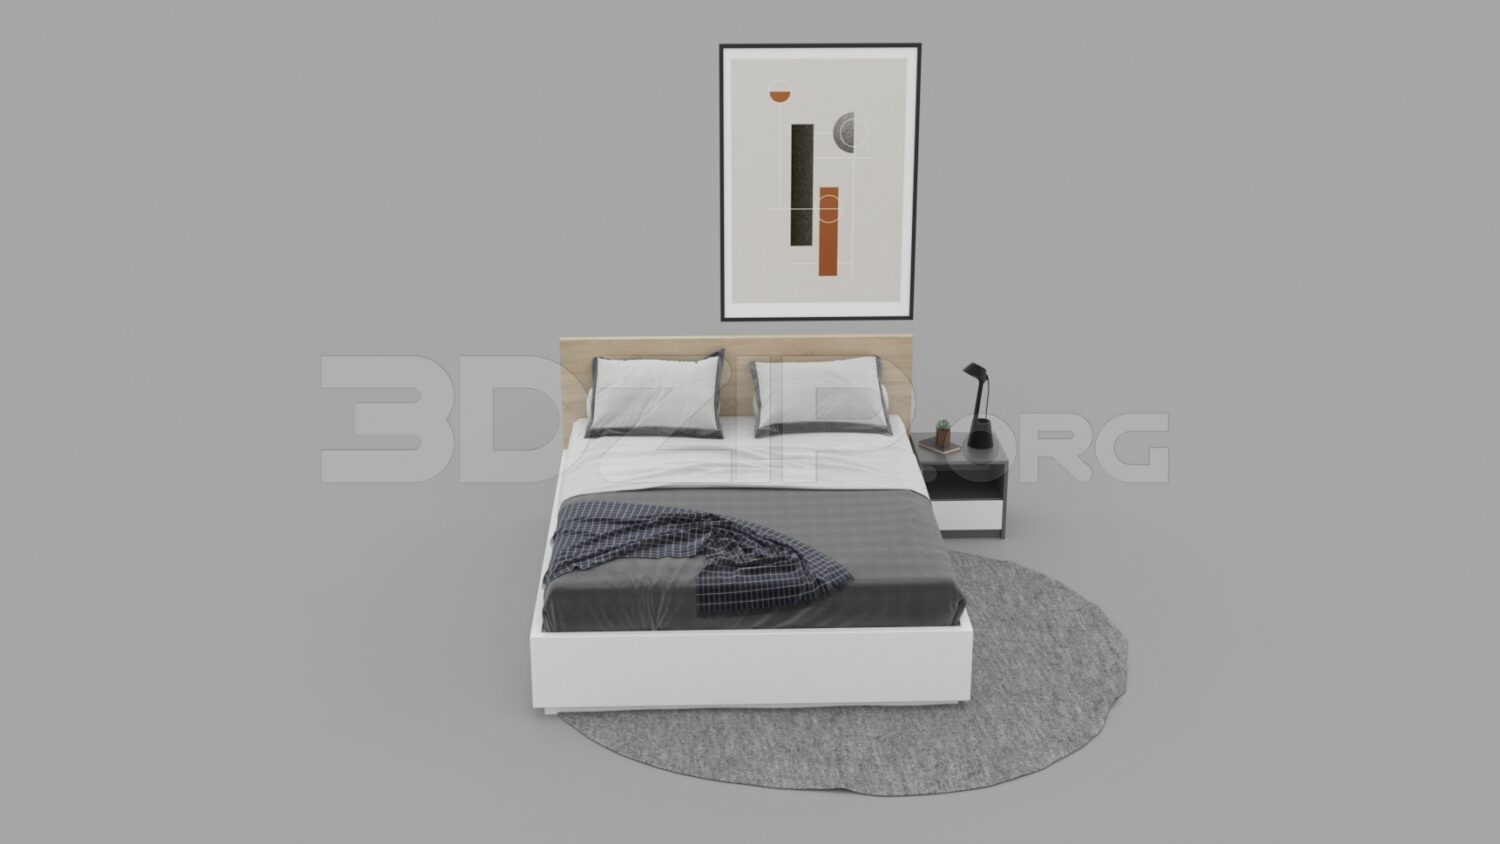 2745. Free 3D Bed Model Download